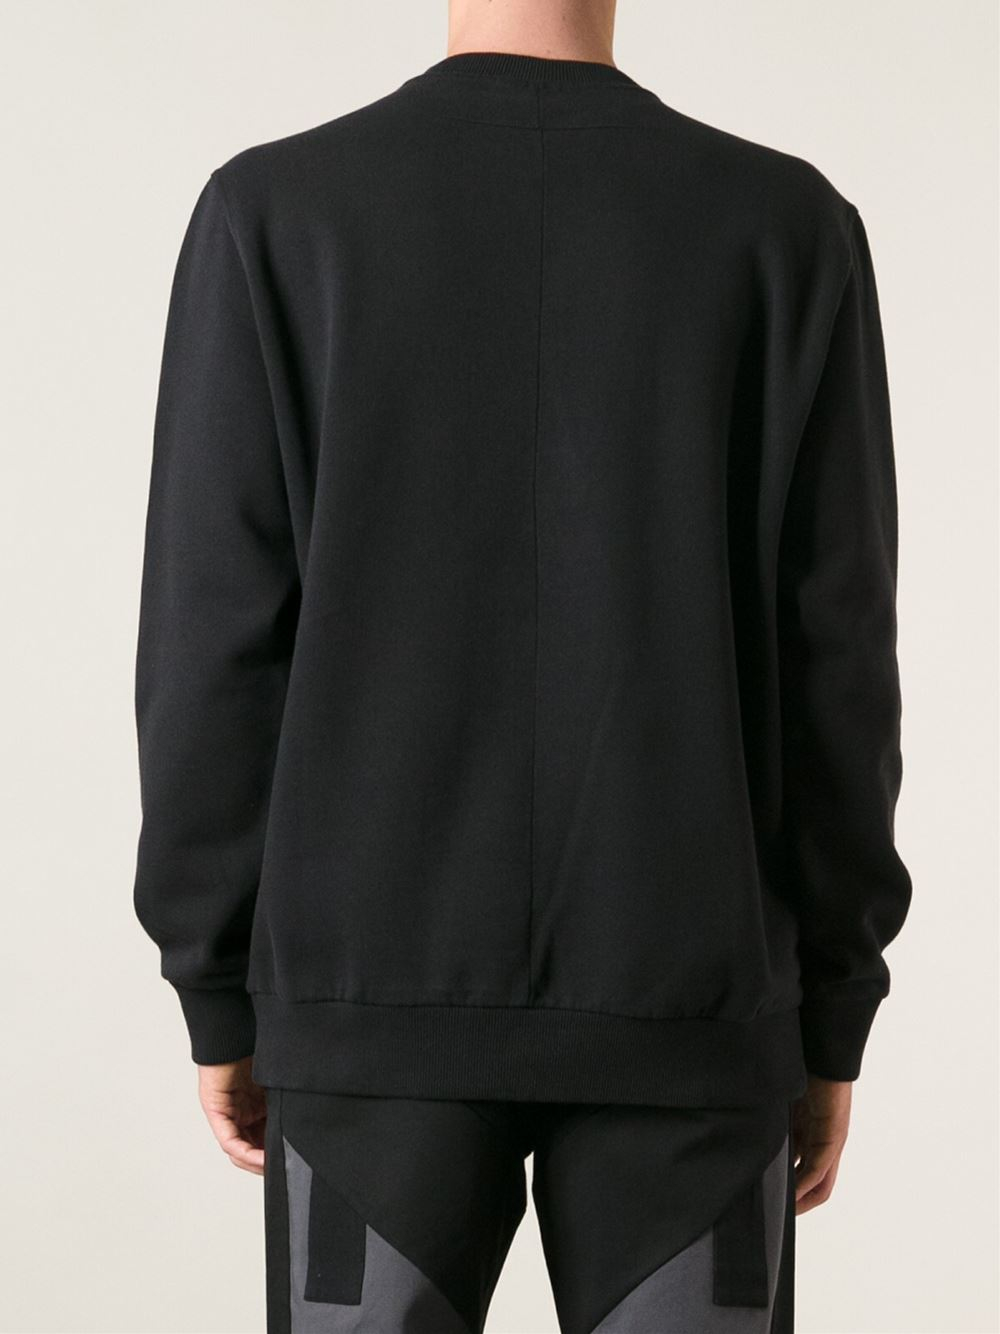 Givenchy Cotton '17 Lucifero' Sweatshirt in Black for Men - Lyst